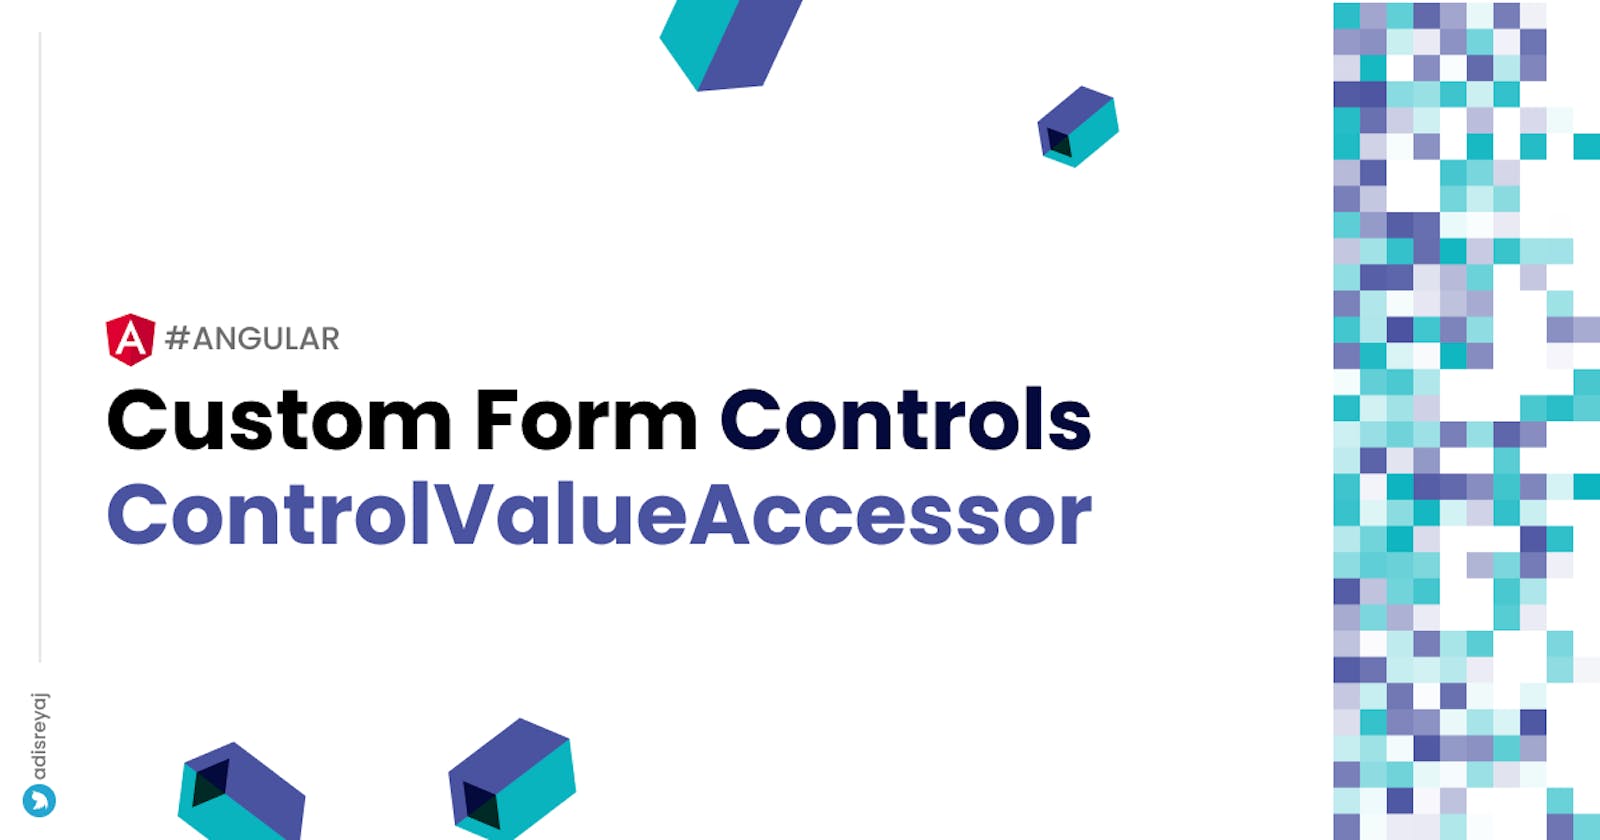 Creating custom form controls using Control Value Accessor in Angular